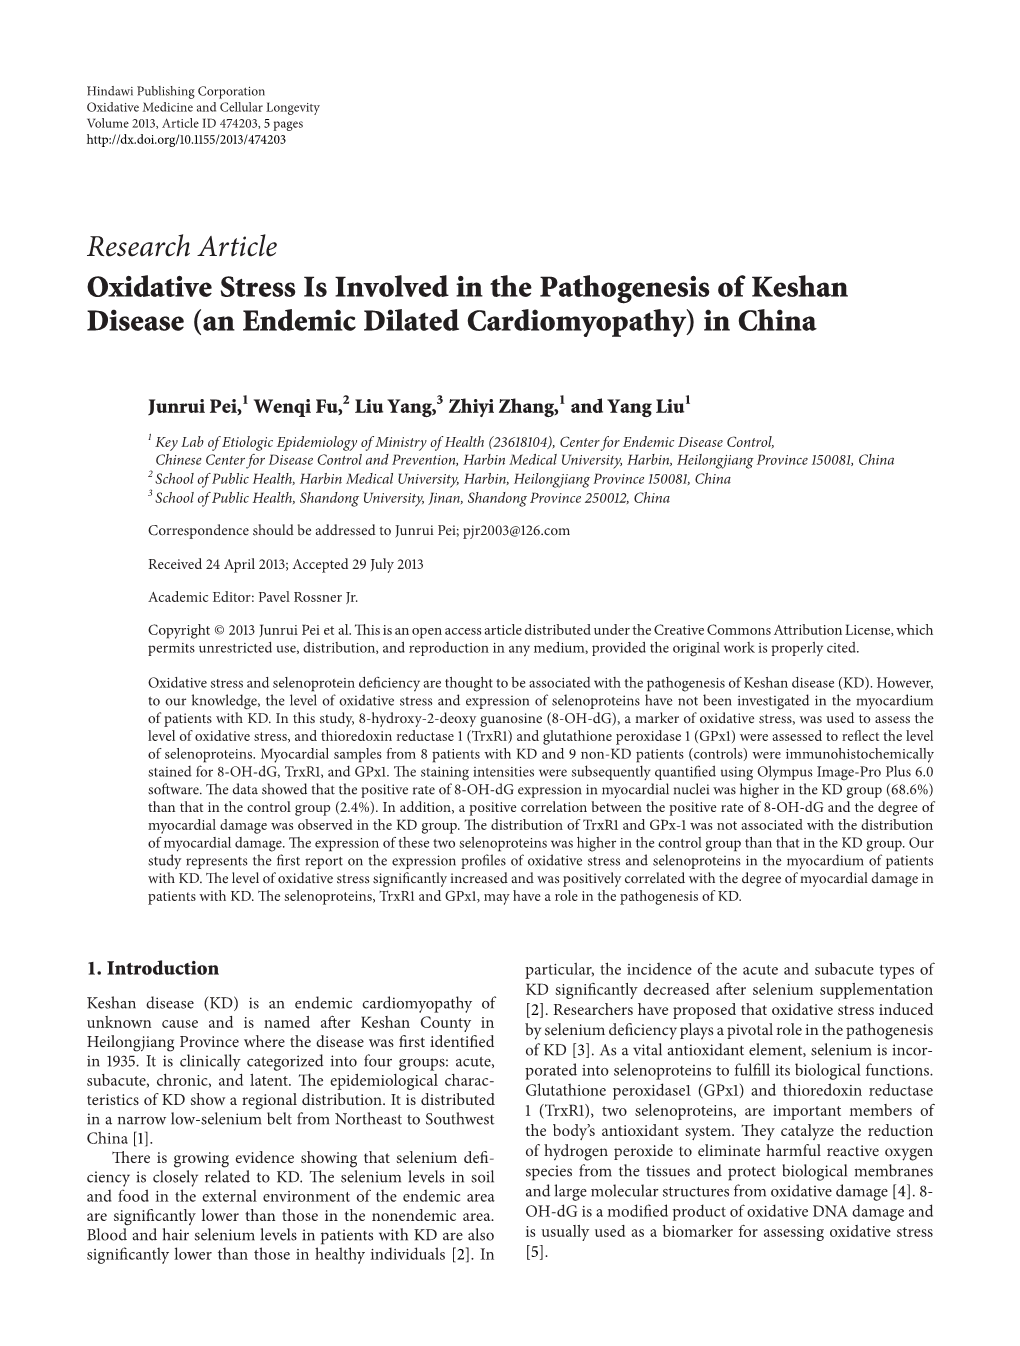 An Endemic Dilated Cardiomyopathy) in China